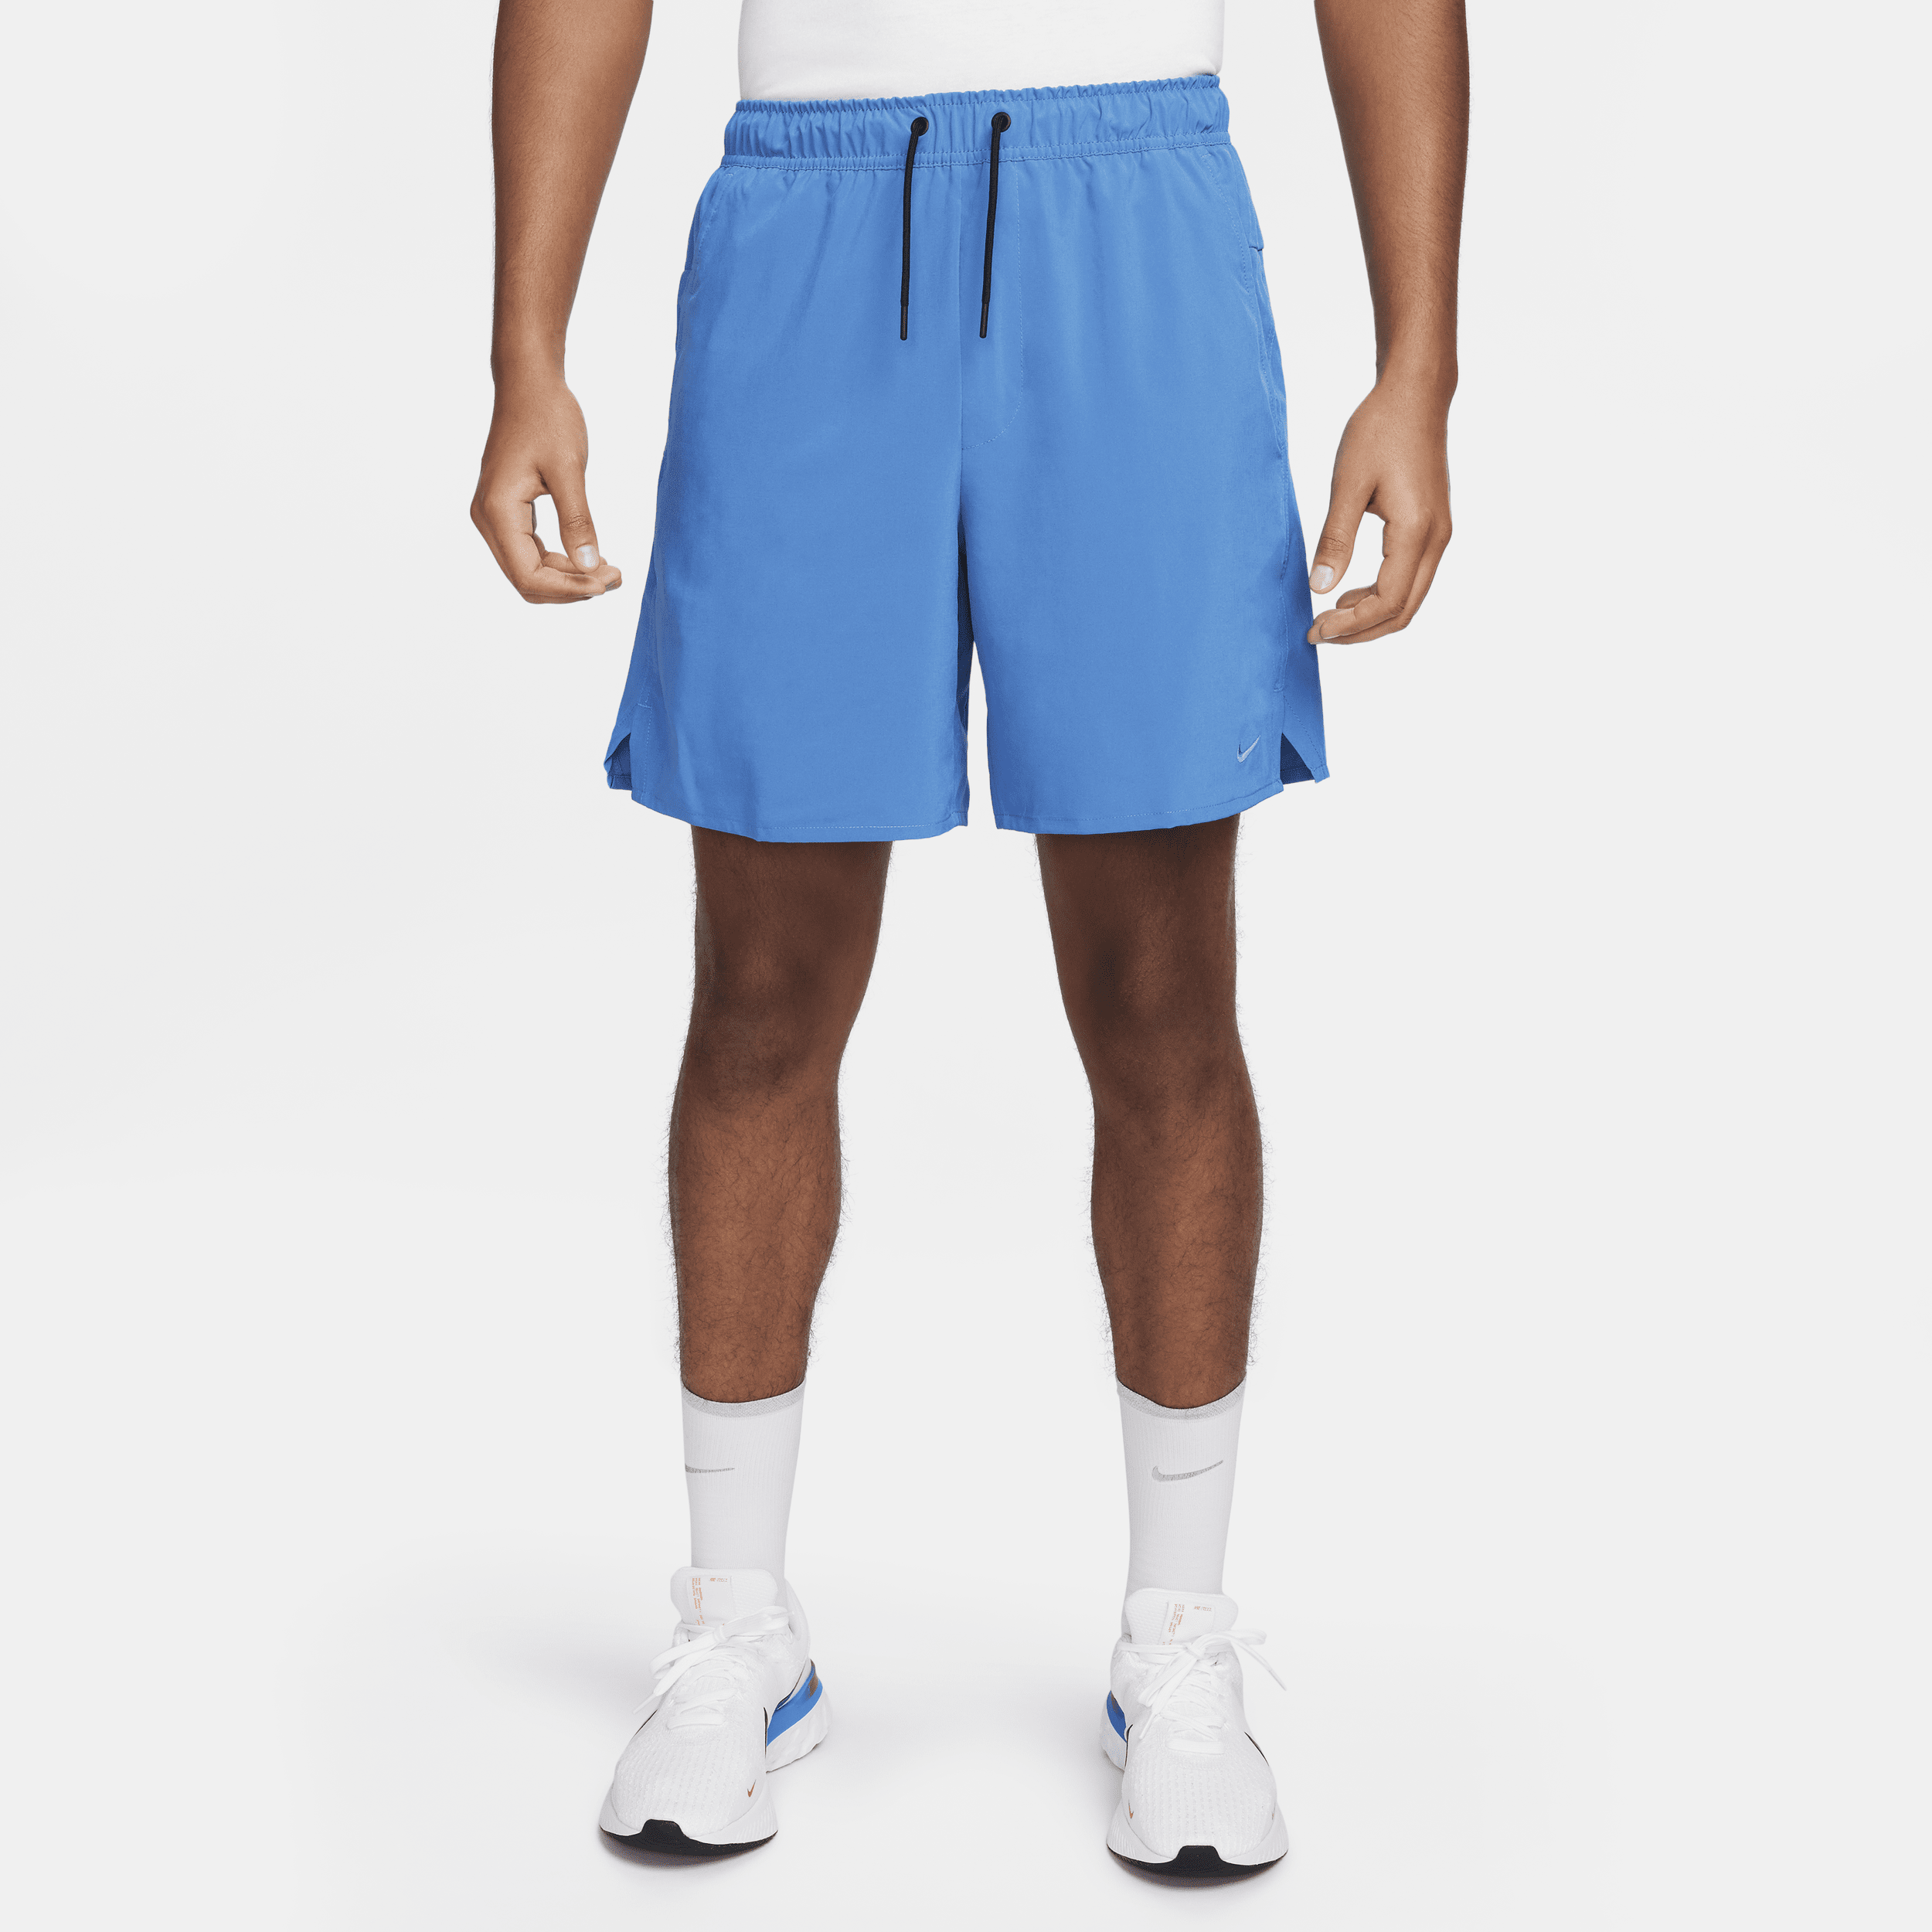 Nike Unlimited multifunctionele niet-gevoerde herenshorts met Dri-FIT (18 cm) - Blauw